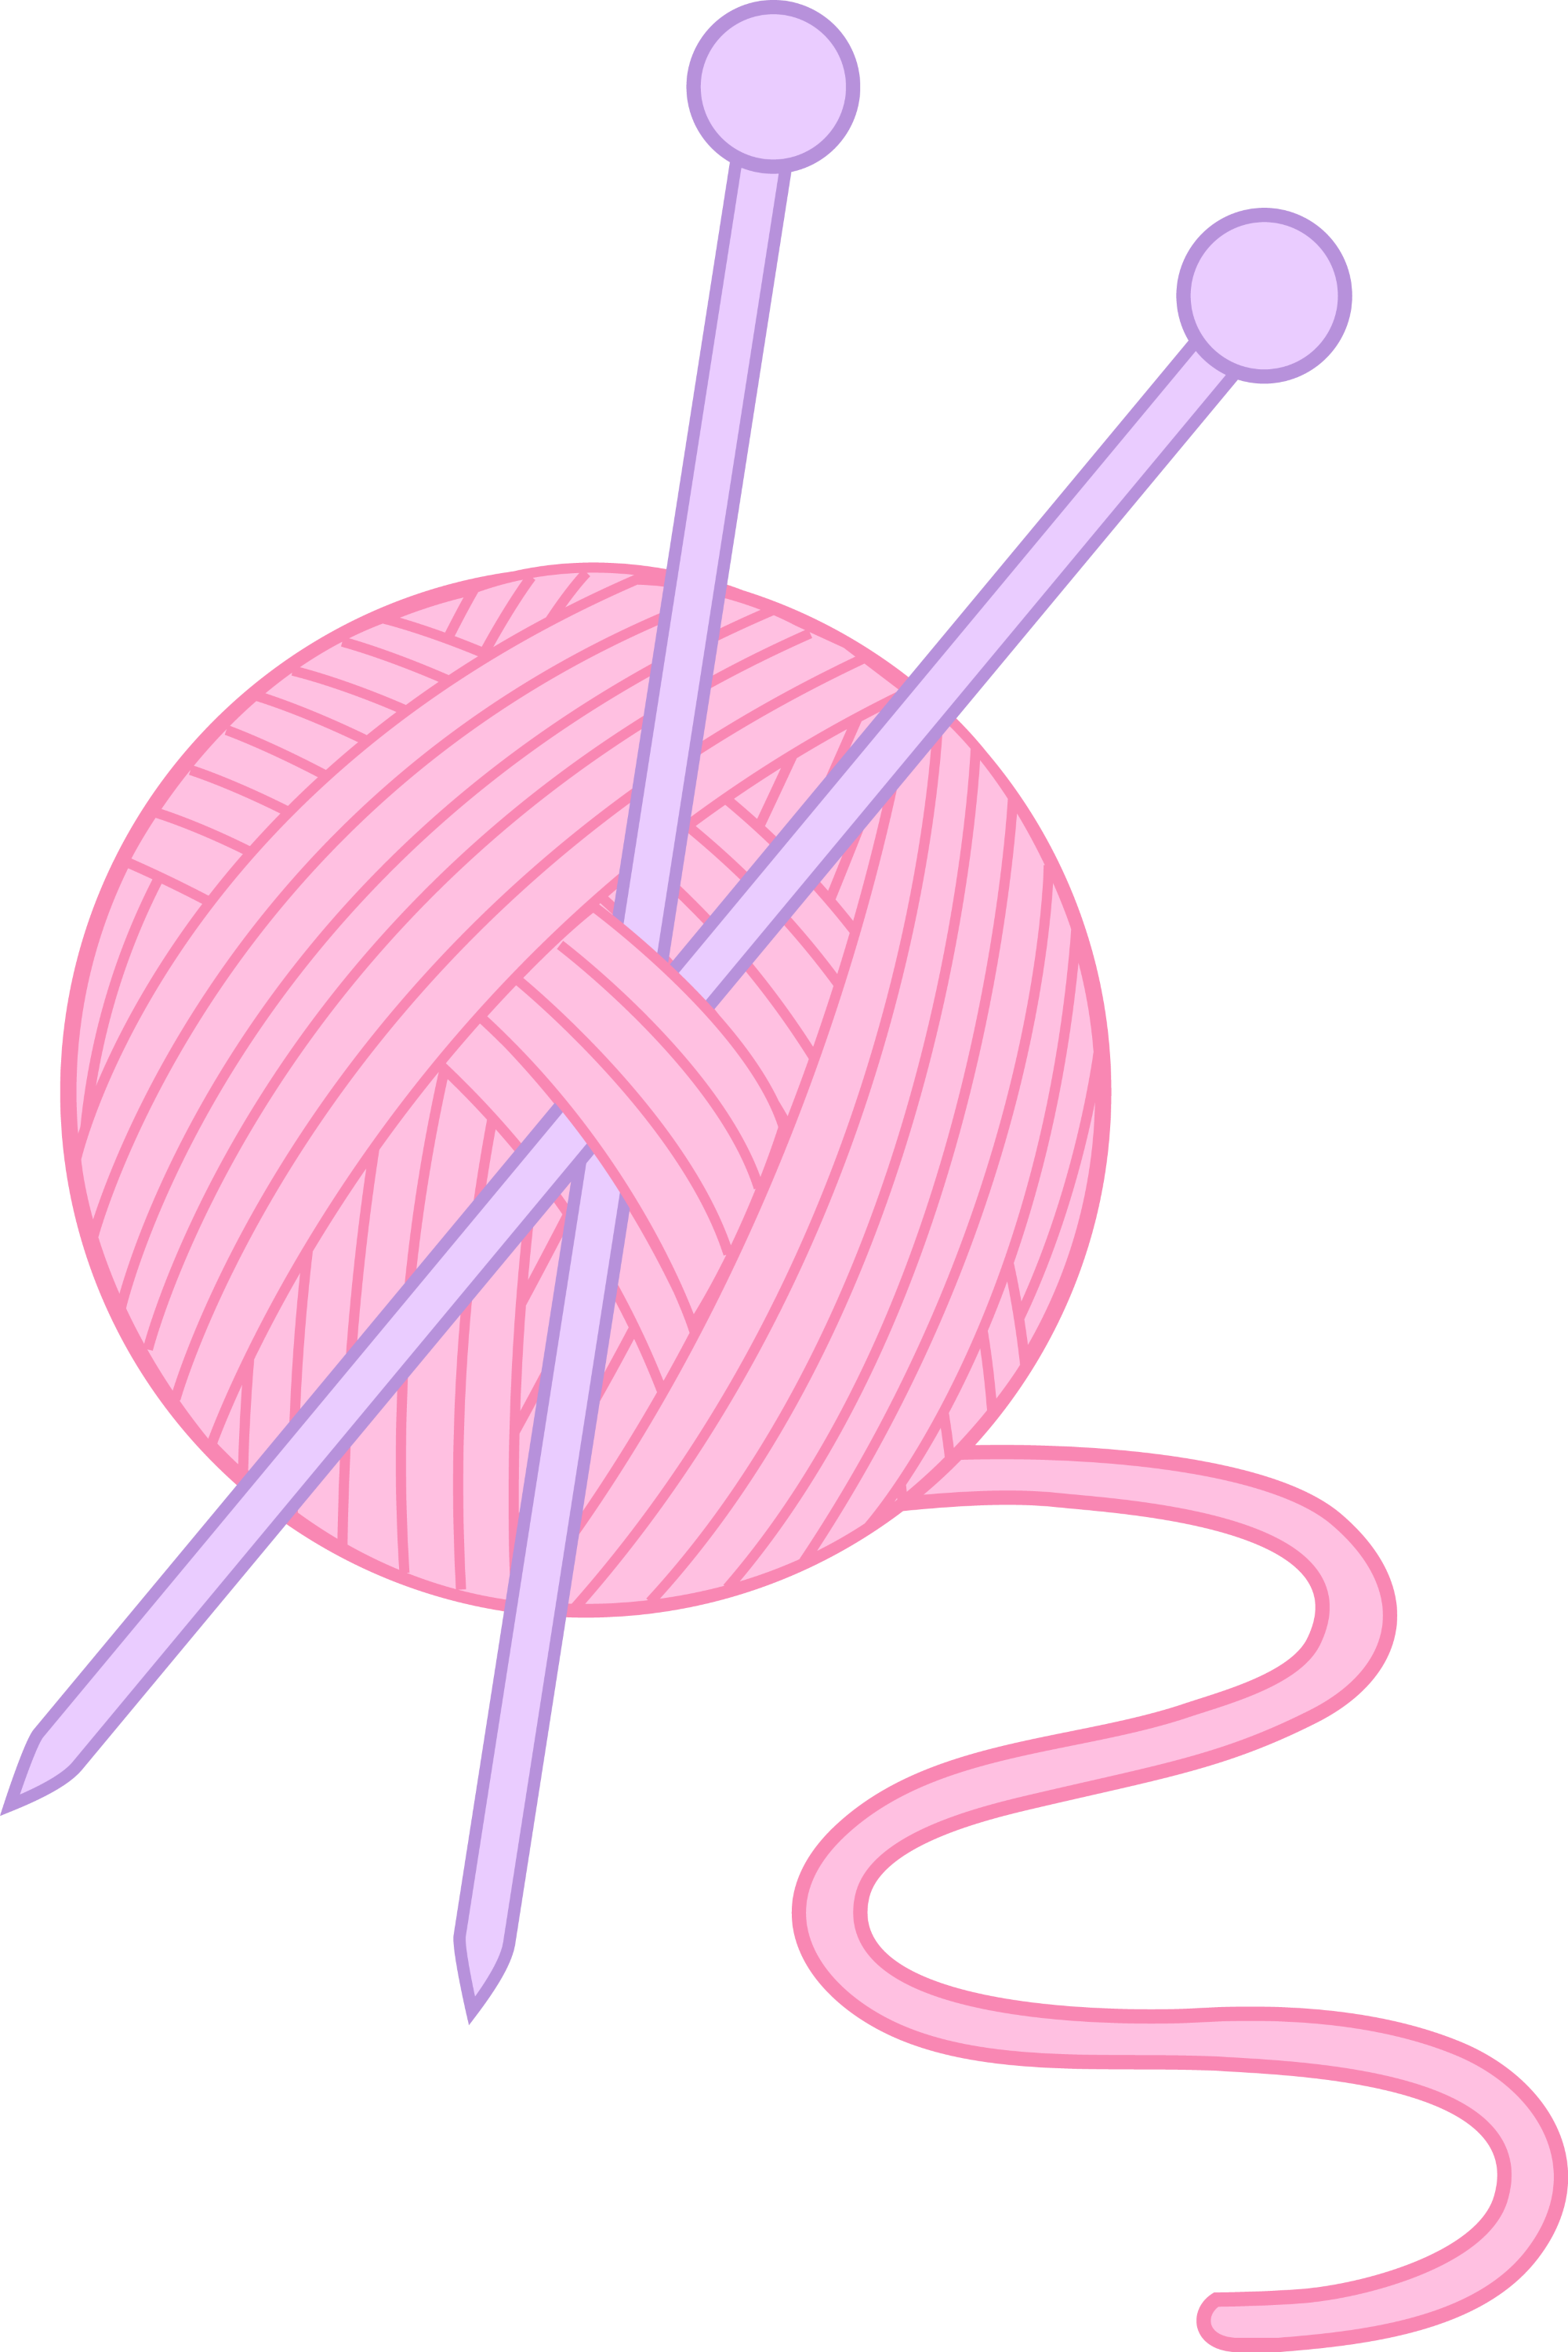 Pink Yarn And Knitting Needles Free Clip Art